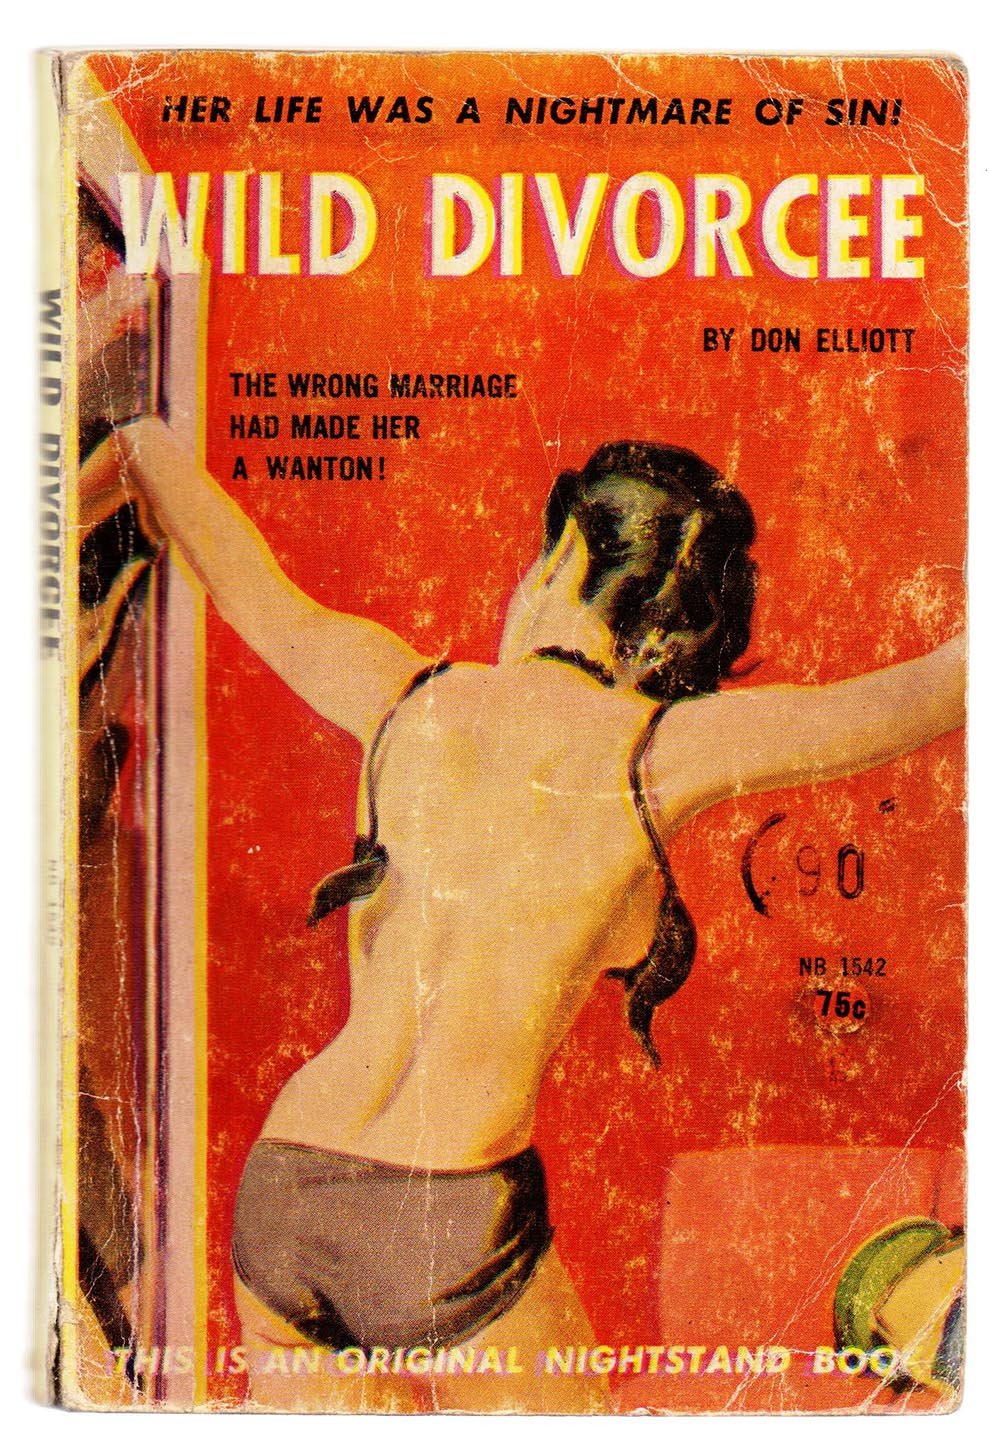 Wild Divorcee